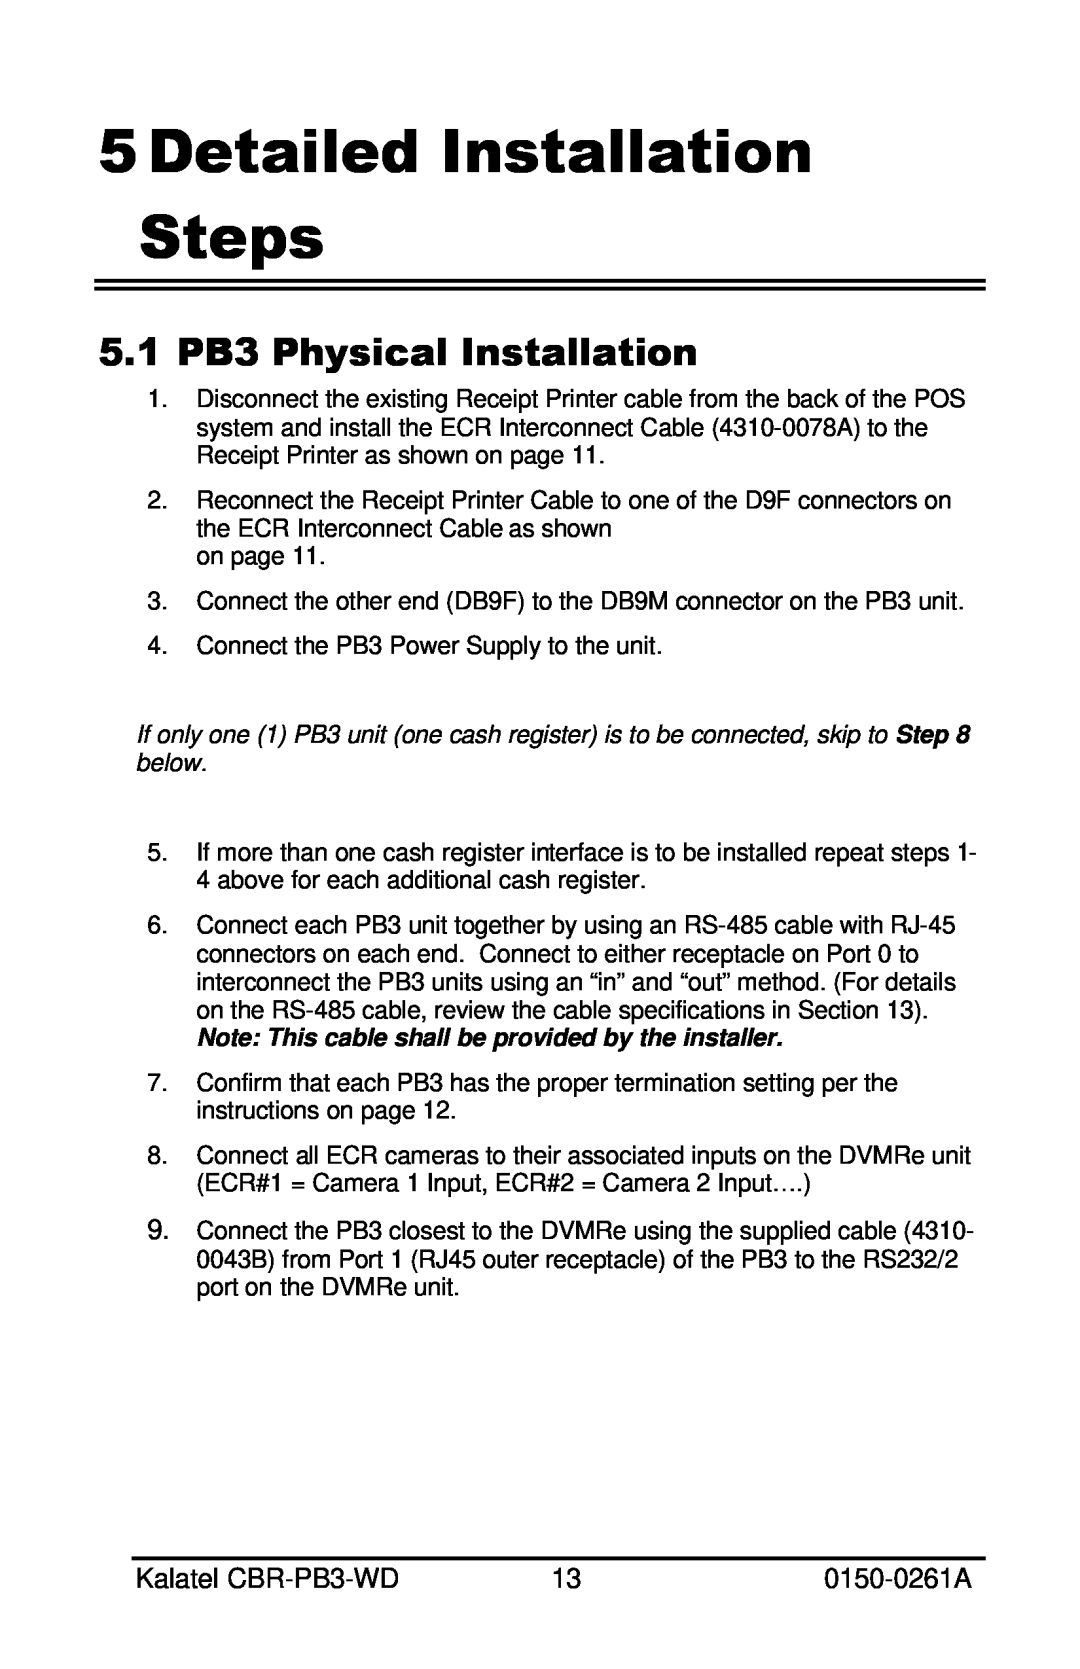 GE CBR-PB3-WD installation manual Detailed Installation Steps, 5.1 PB3 Physical Installation 